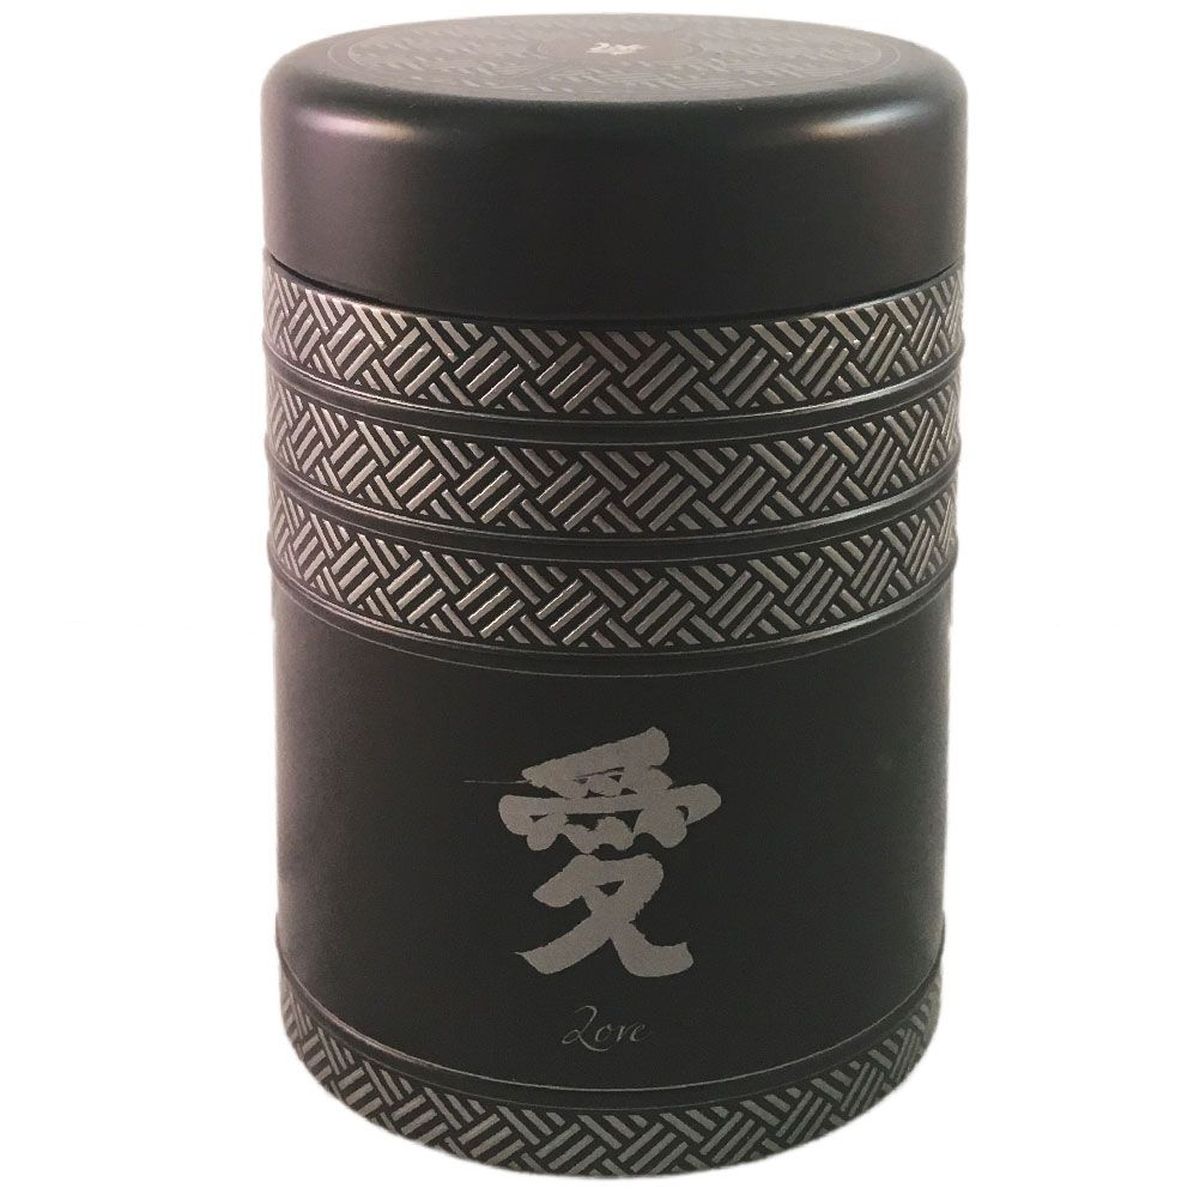 Boite  Th Kyoto noire en mtal - 7,5 x 11 cm - 125 grs